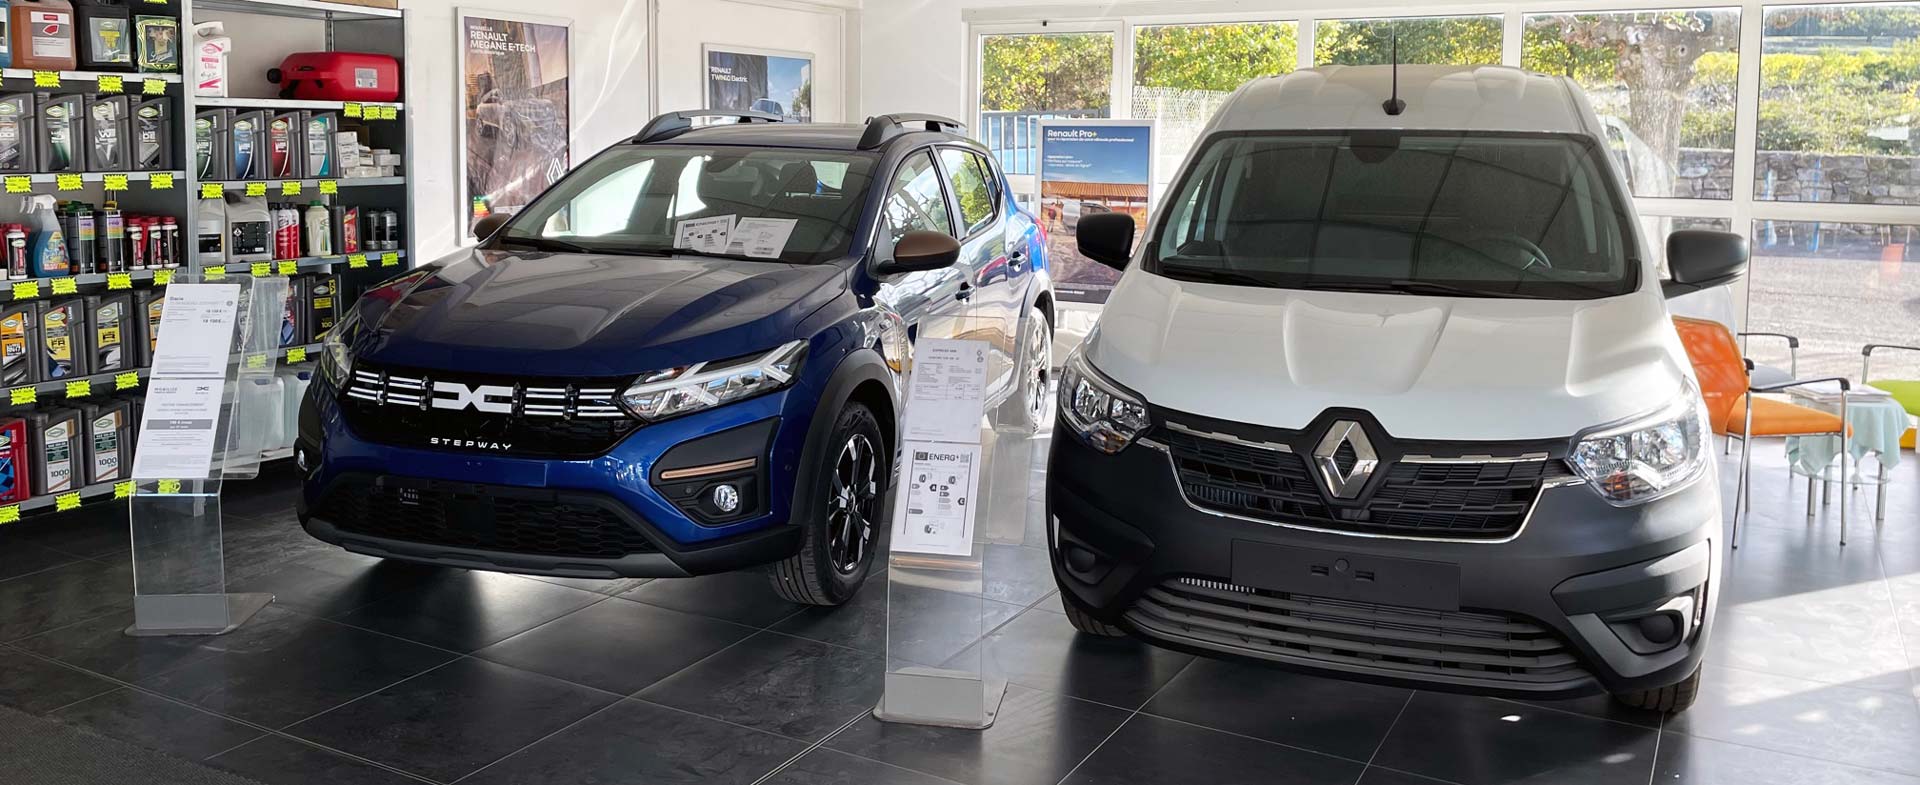 Vente véhicules neufs Renault